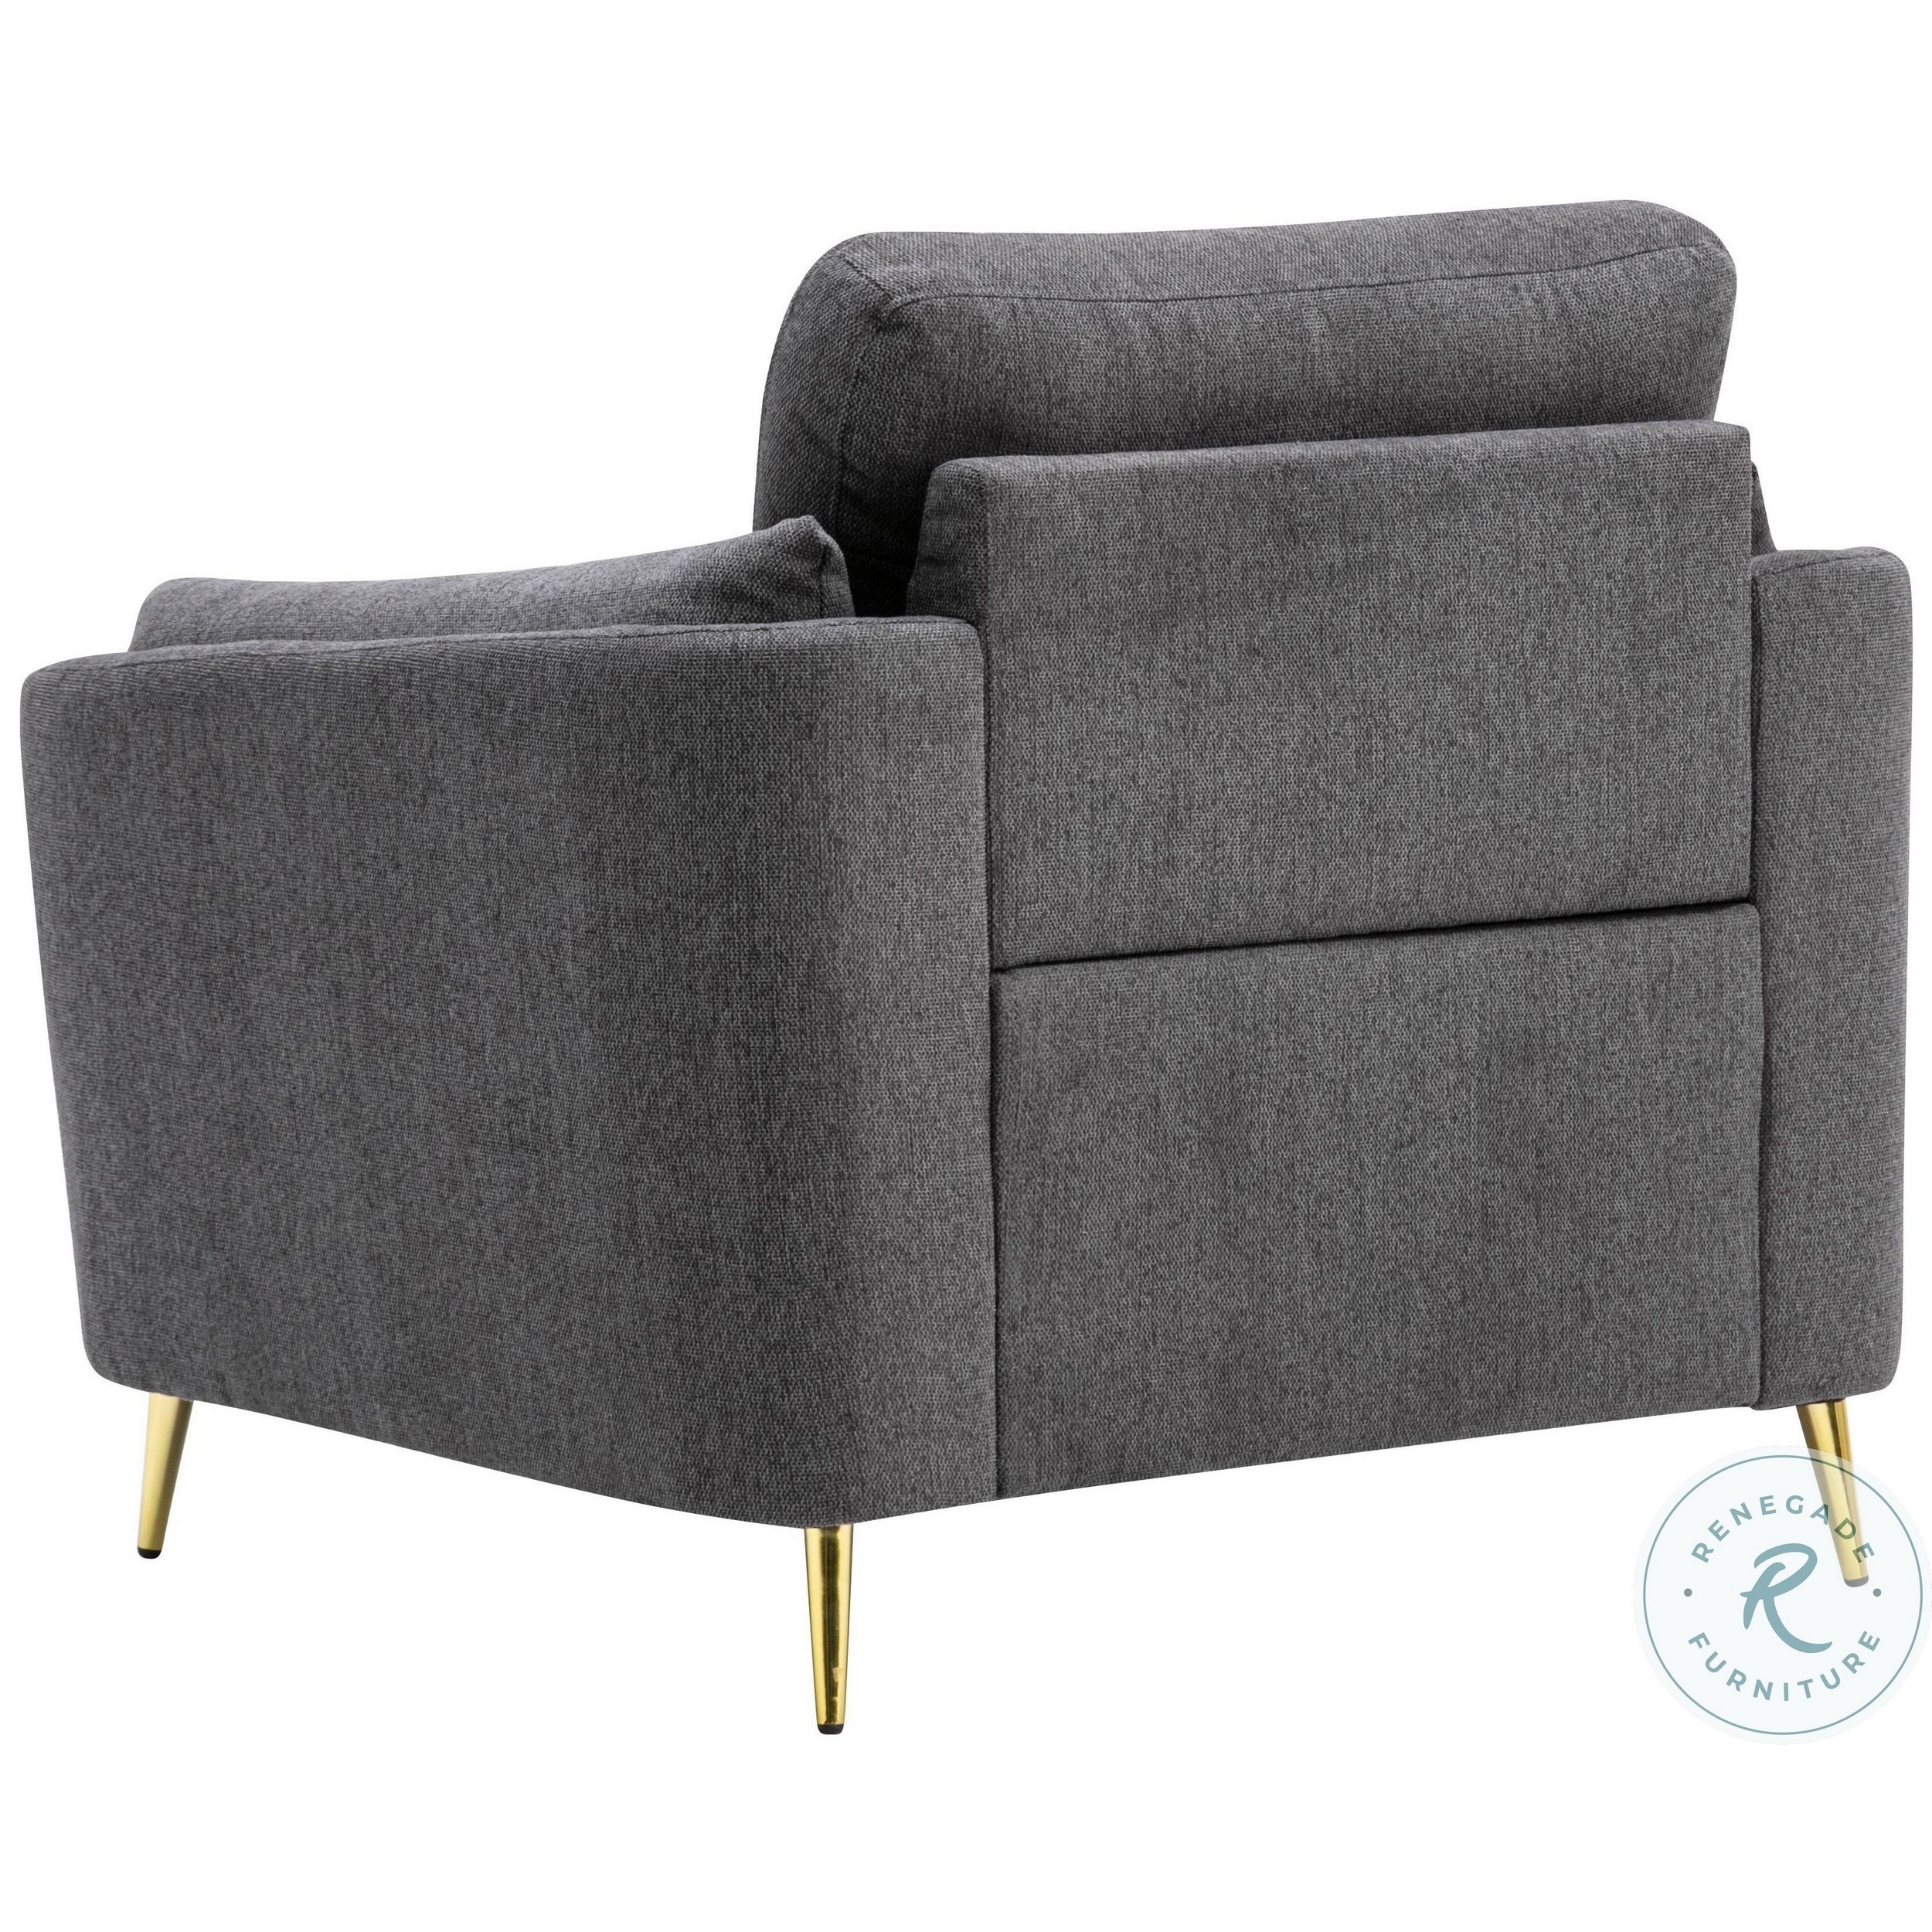 Jace 35 Inch Accent Chair, Dark Gray Polyester, Gold Metal Legs, Pillow Back- Saltoro Sherpi